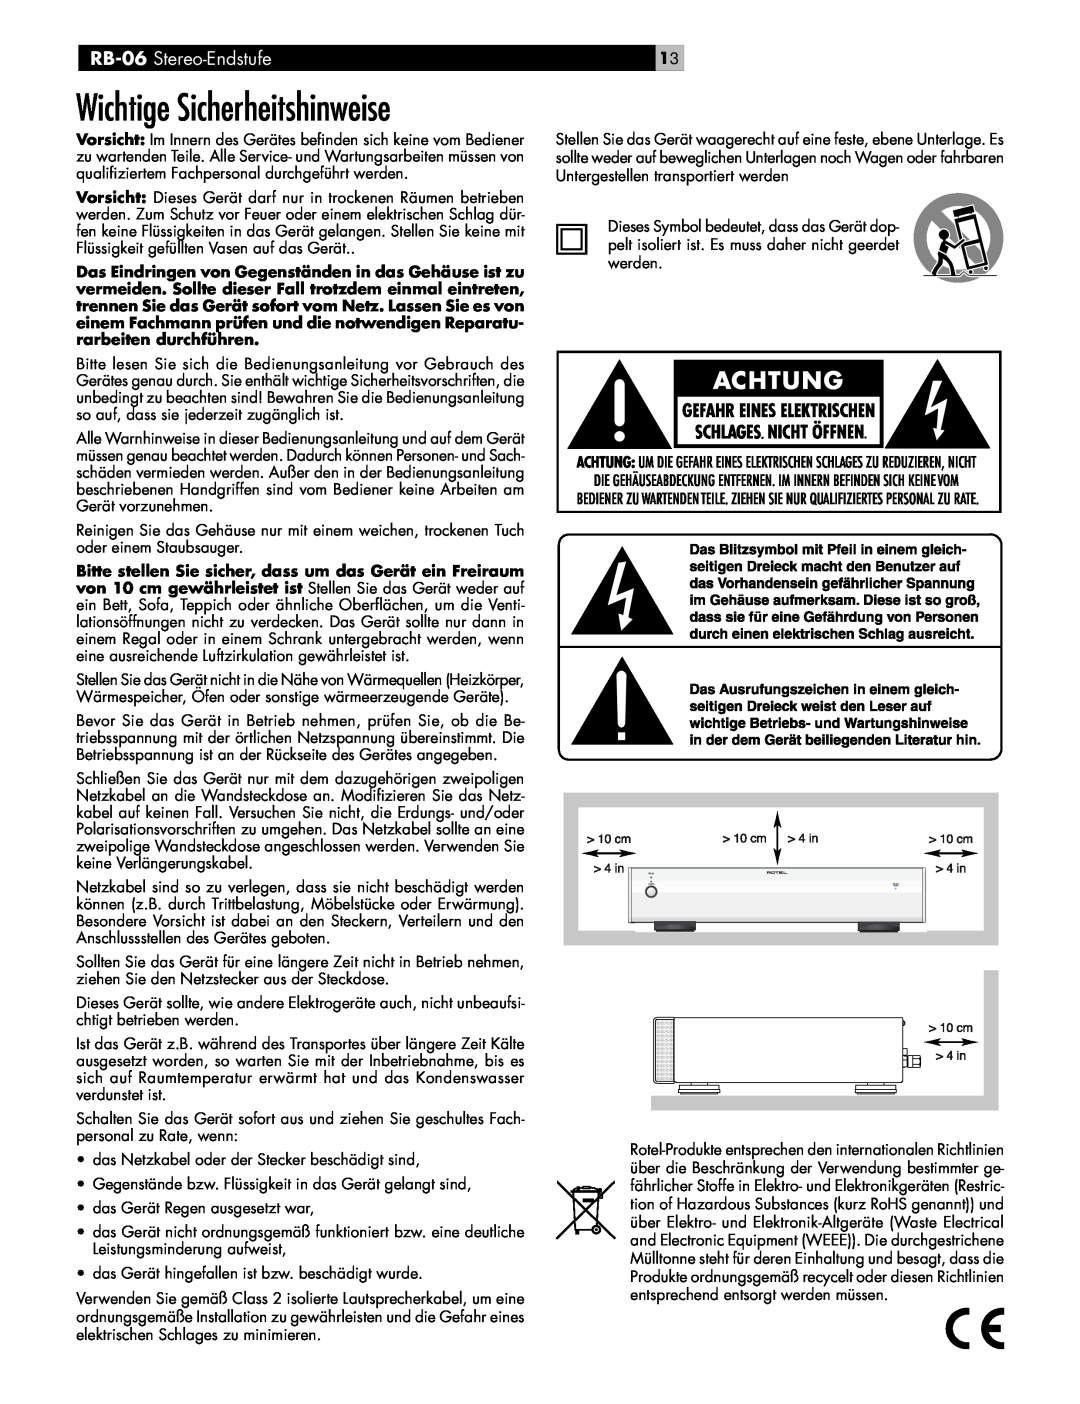 Rotel owner manual Wichtige Sicherheitshinweise, RB-06 Stereo-Endstufe 